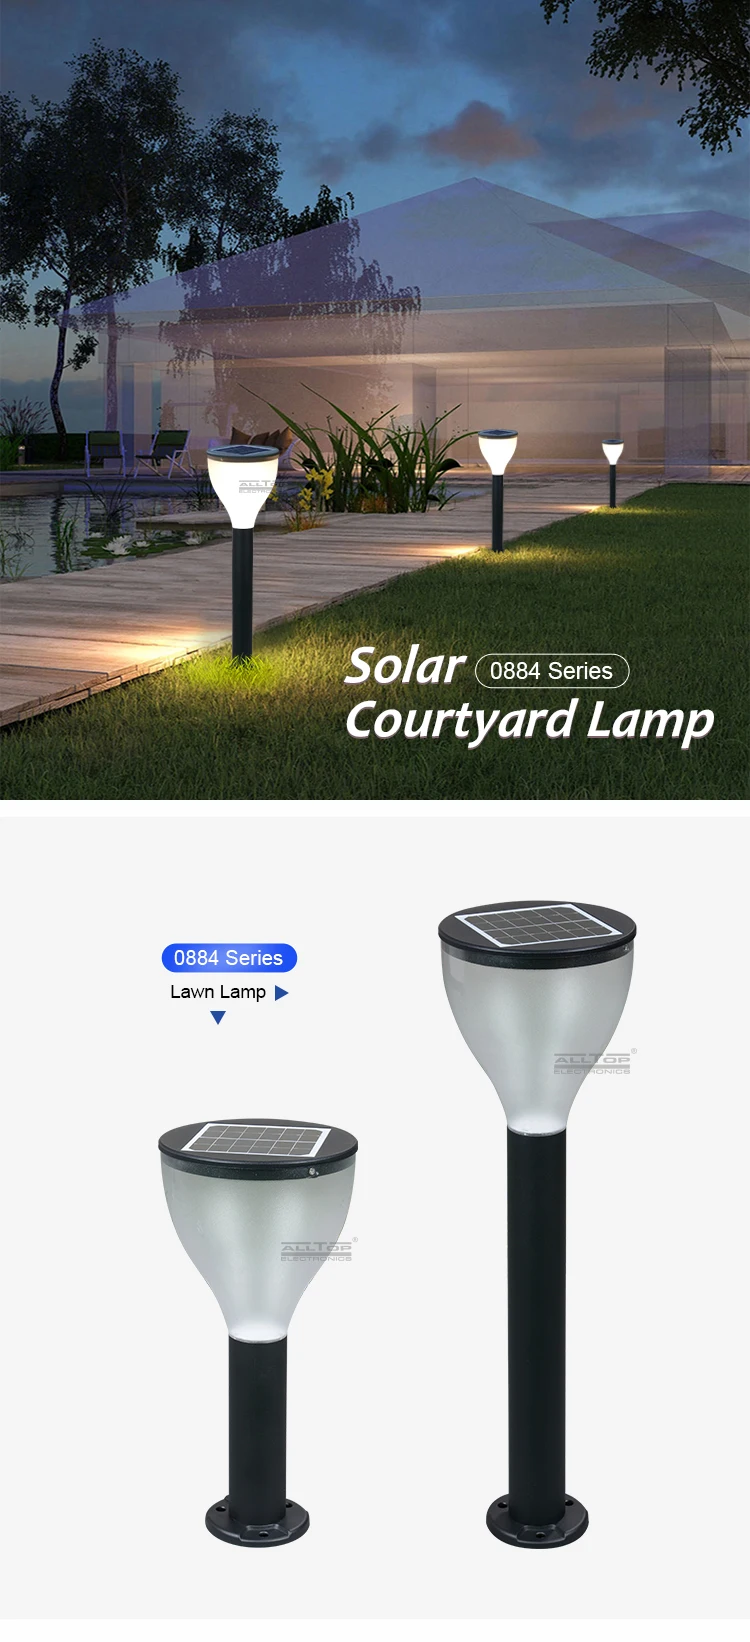 ALLTOP intergrated waterproof ip65 outdoor lighting all in one 3w solar led garden light price